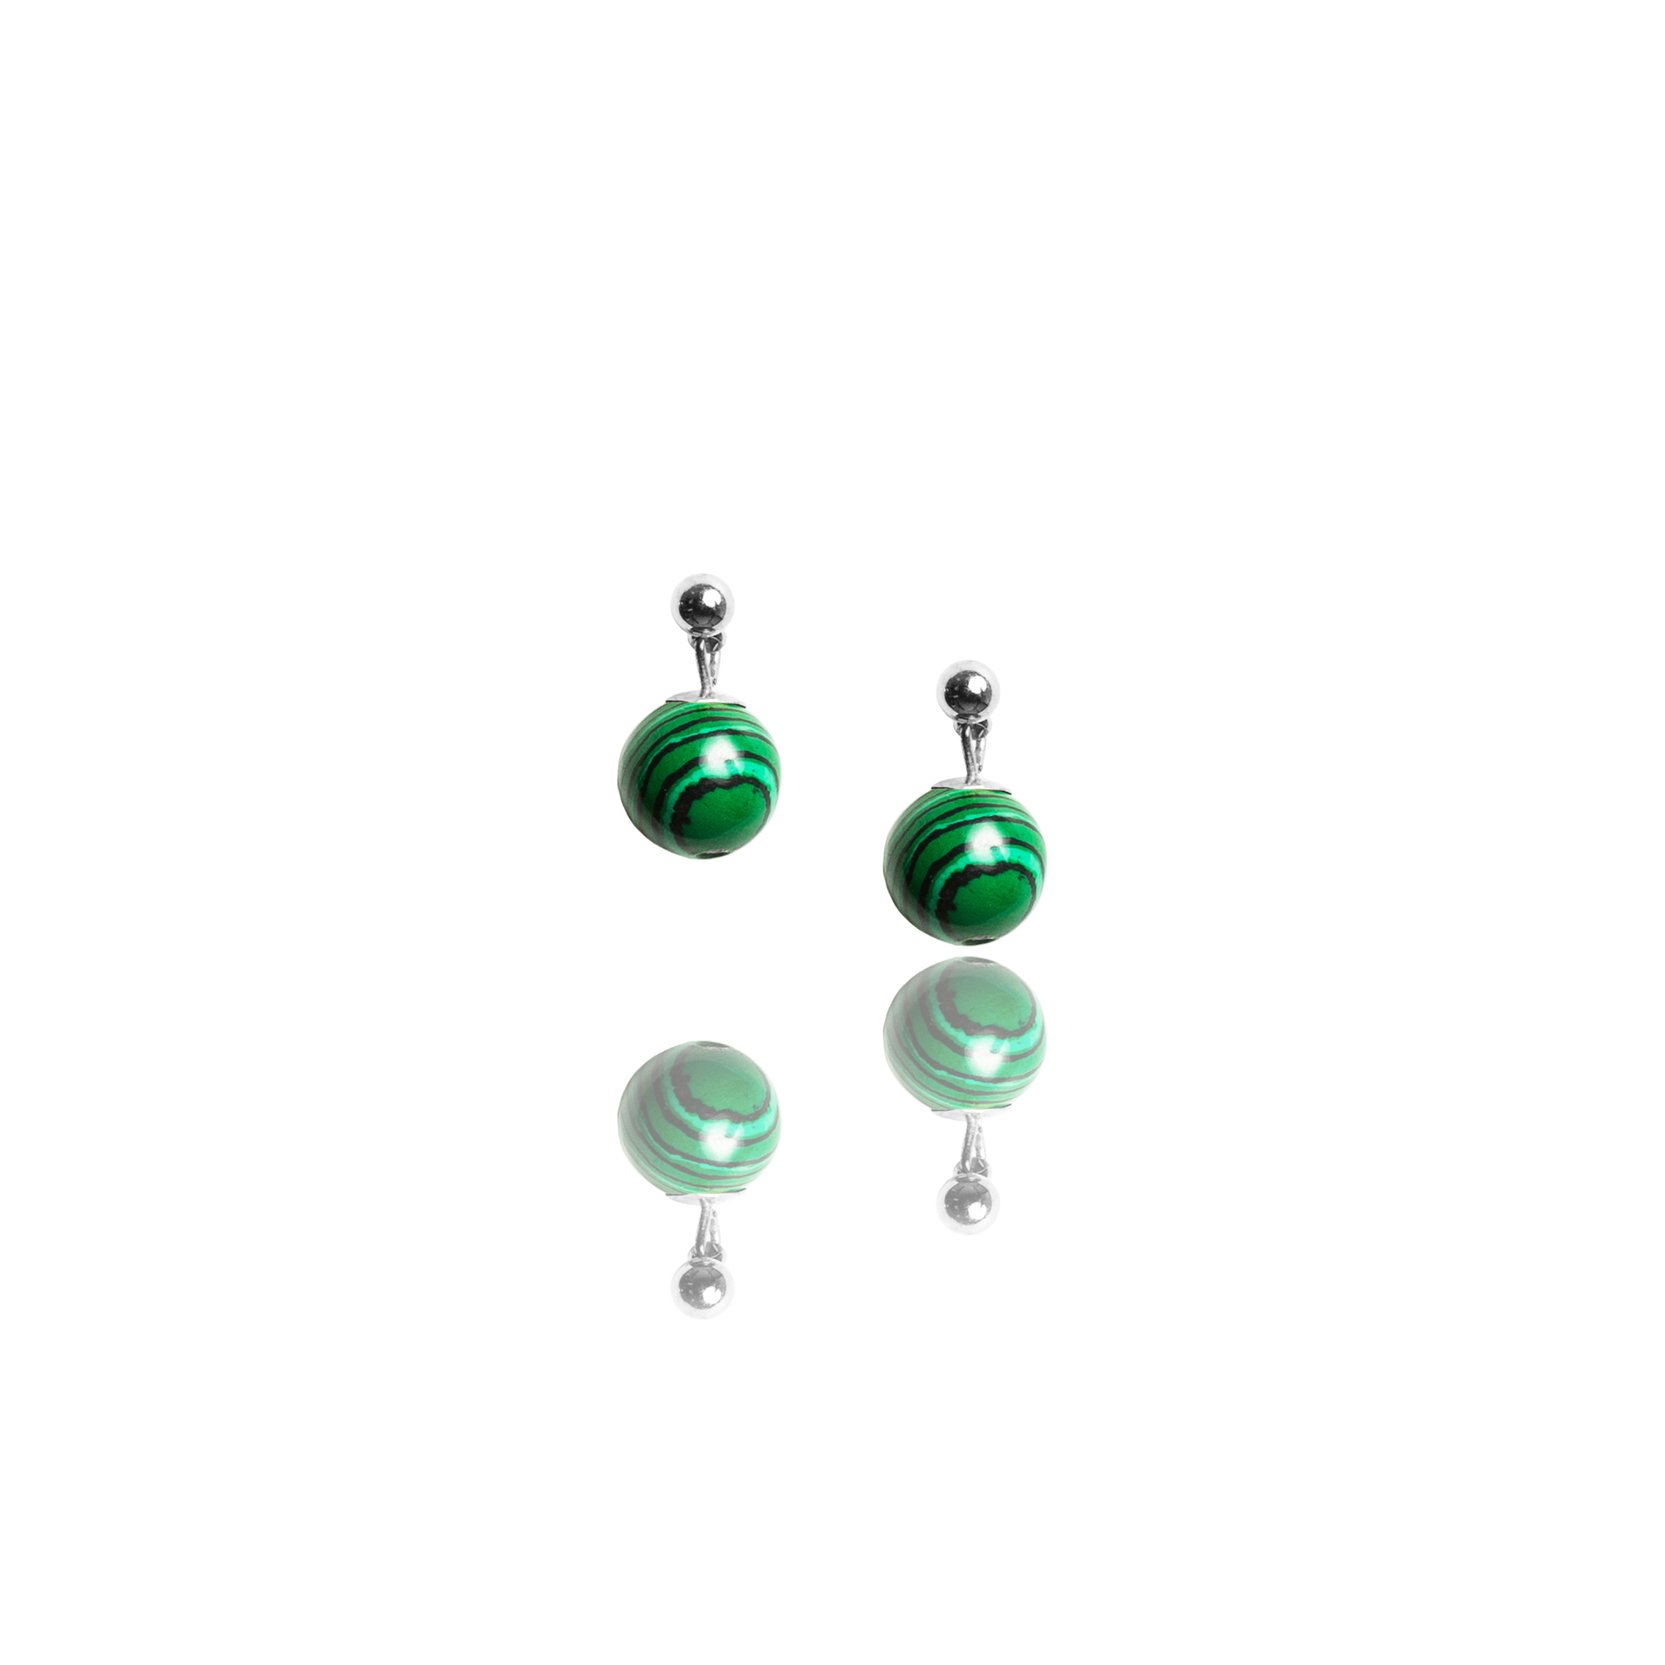 Stud earrings with malachite